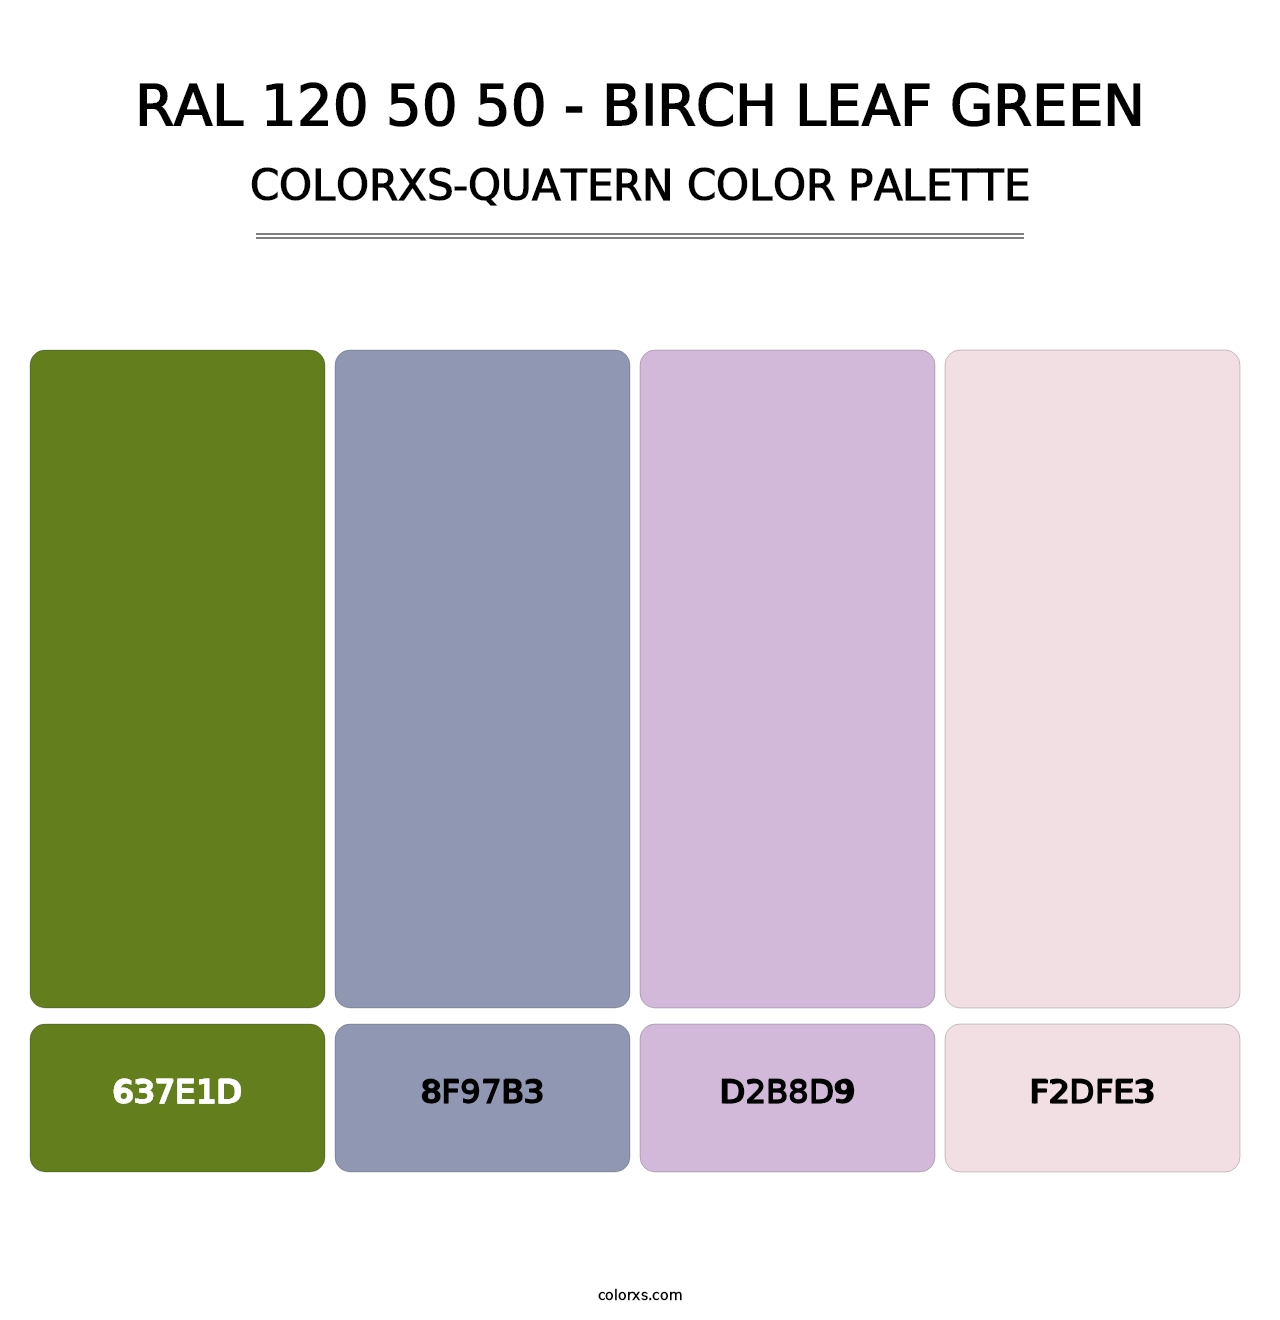 RAL 120 50 50 - Birch Leaf Green - Colorxs Quatern Palette